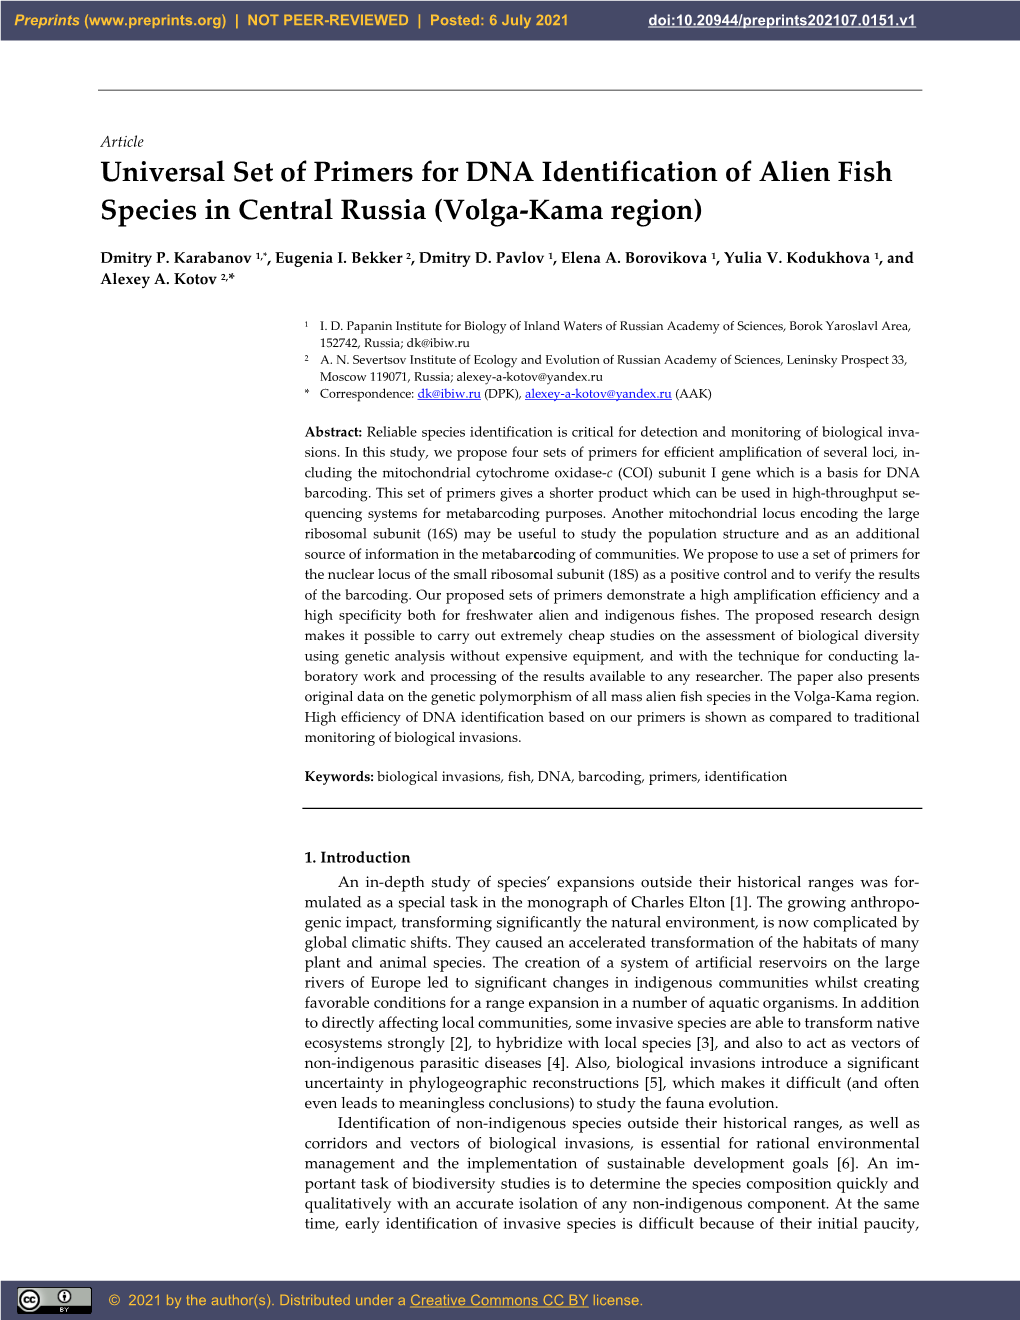 Universal Set of Primers for DNA Identification of Alien Fish Species in Central Russia (Volga-Kama Region)